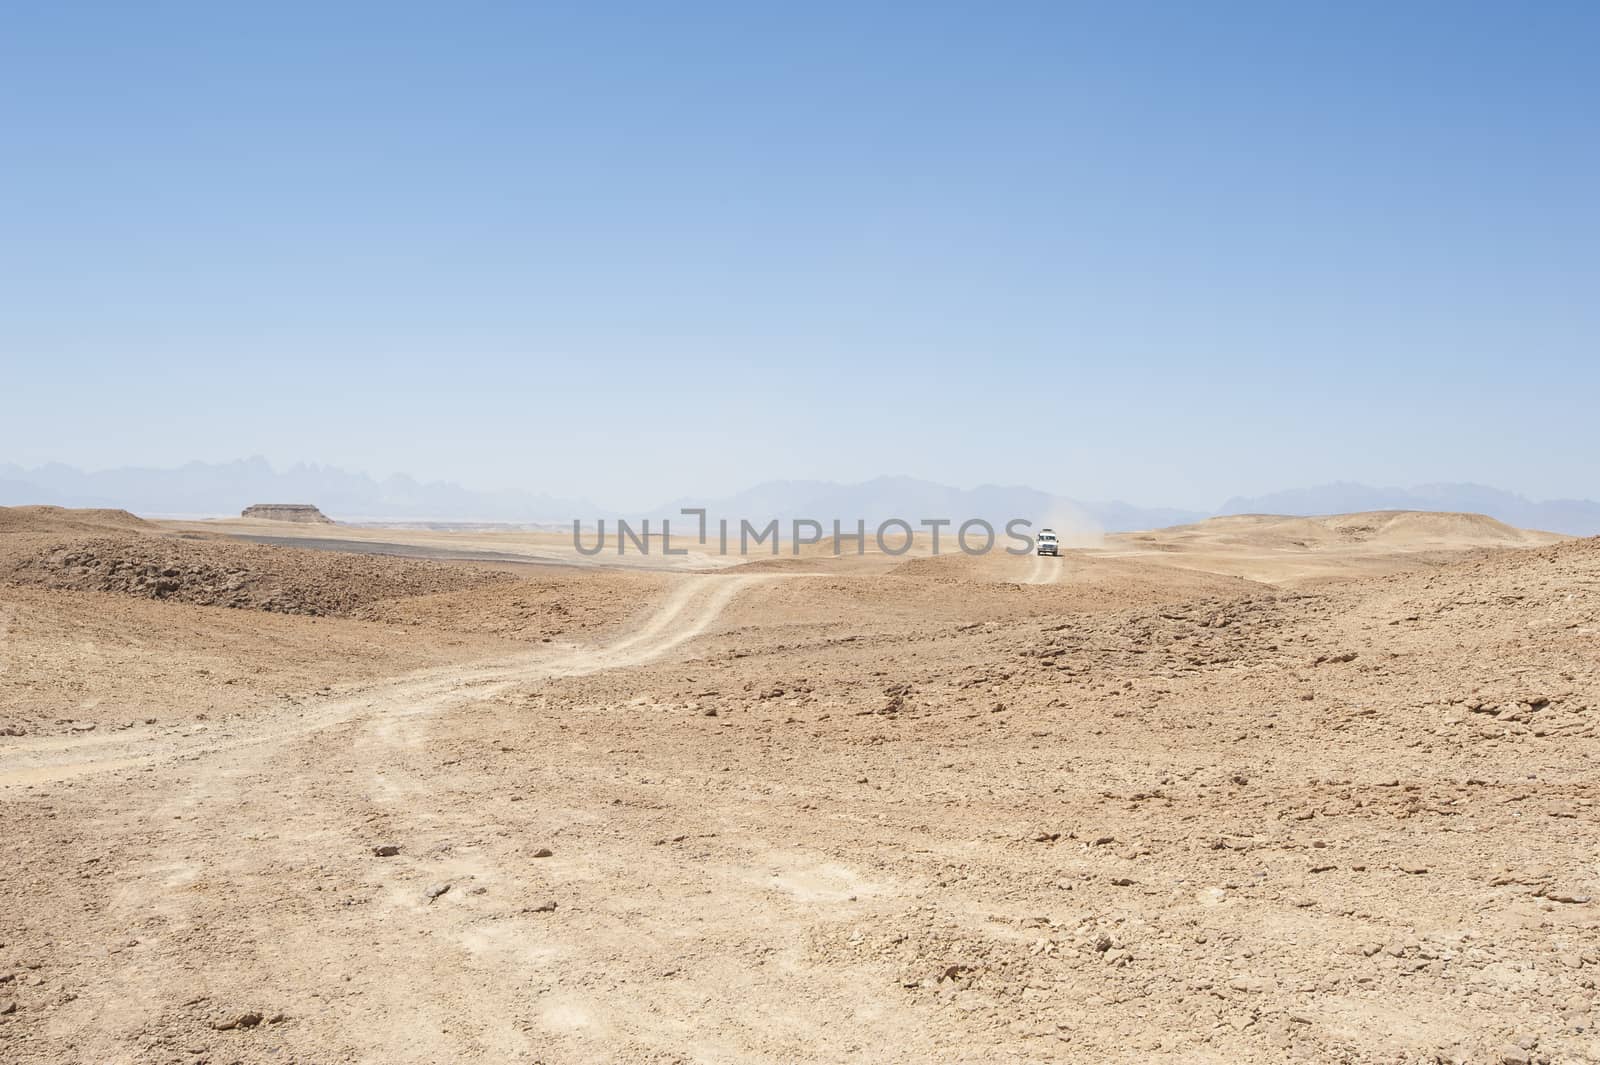 Travel on an empty desert landscape by paulvinten